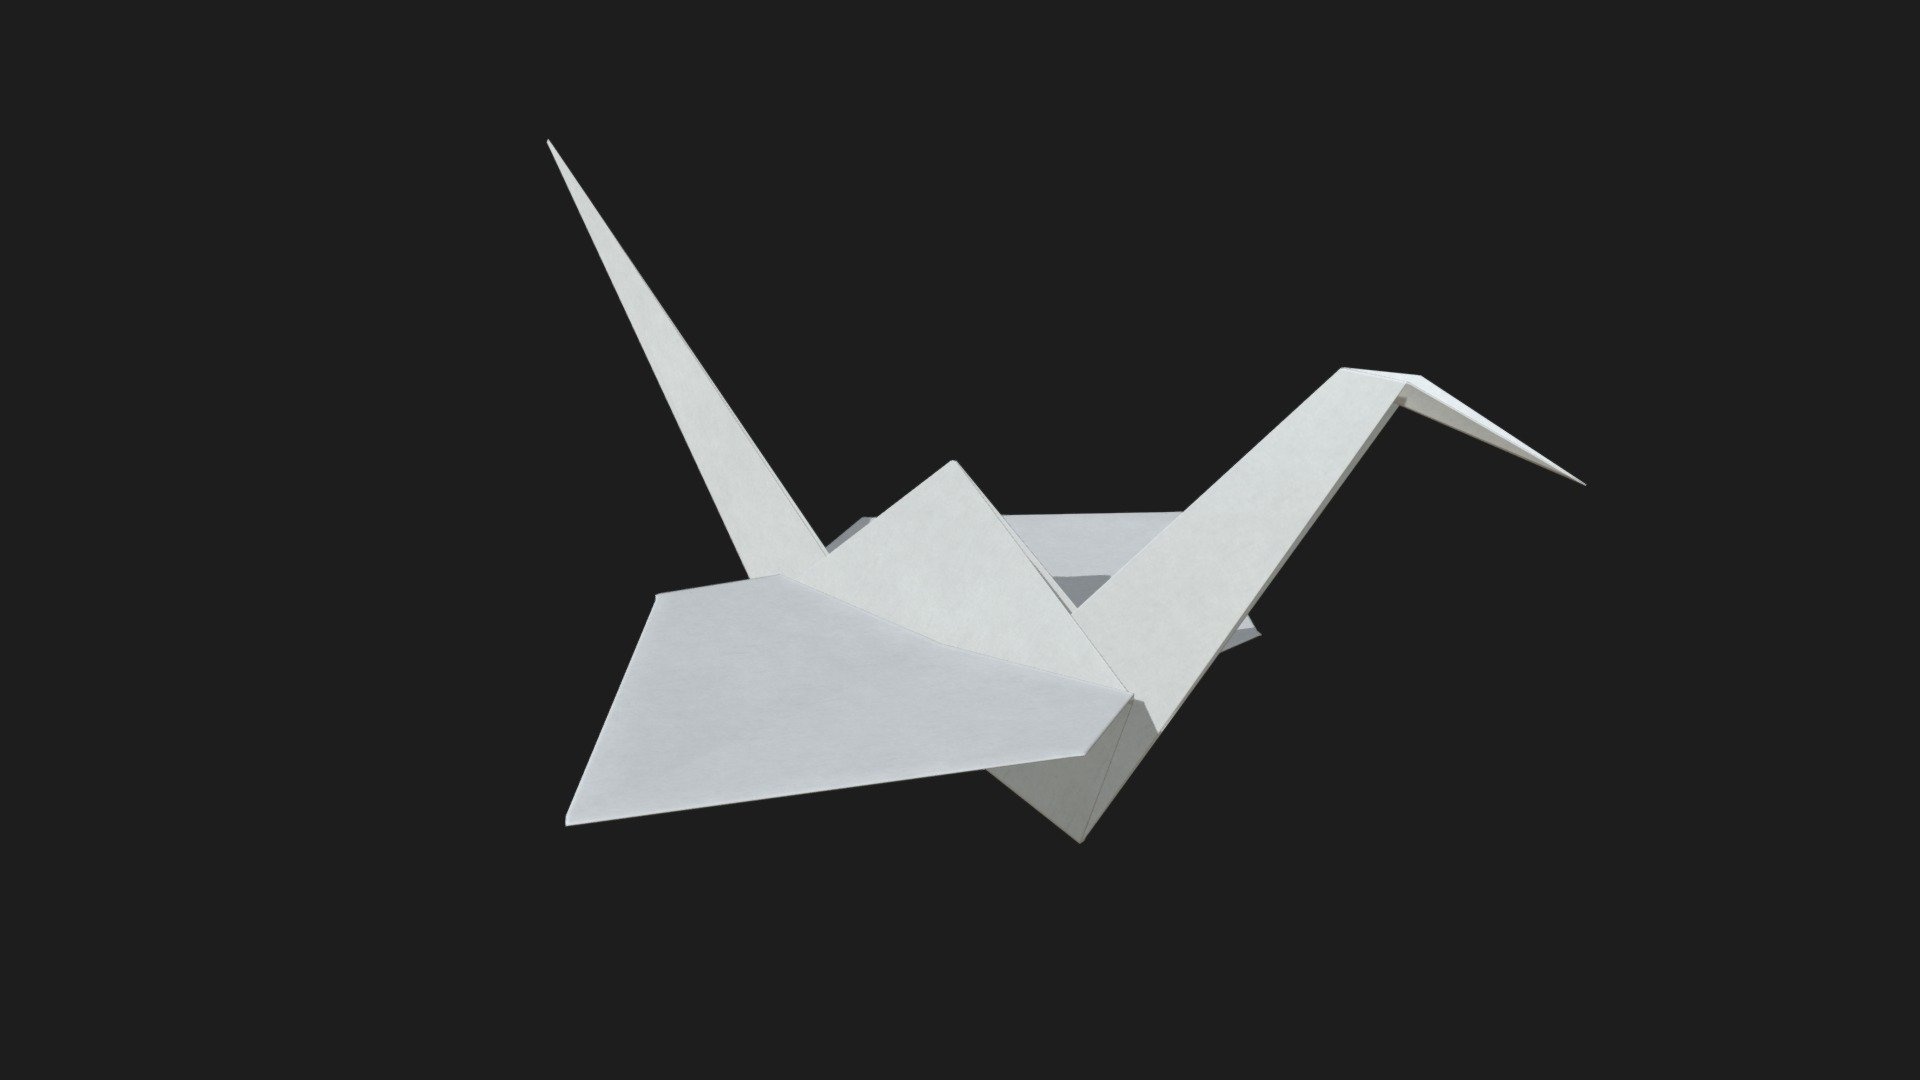 Paper Crane, Origami paper crane, Royalty-free 3D model, Intricate design, 1920x1080 Full HD Desktop